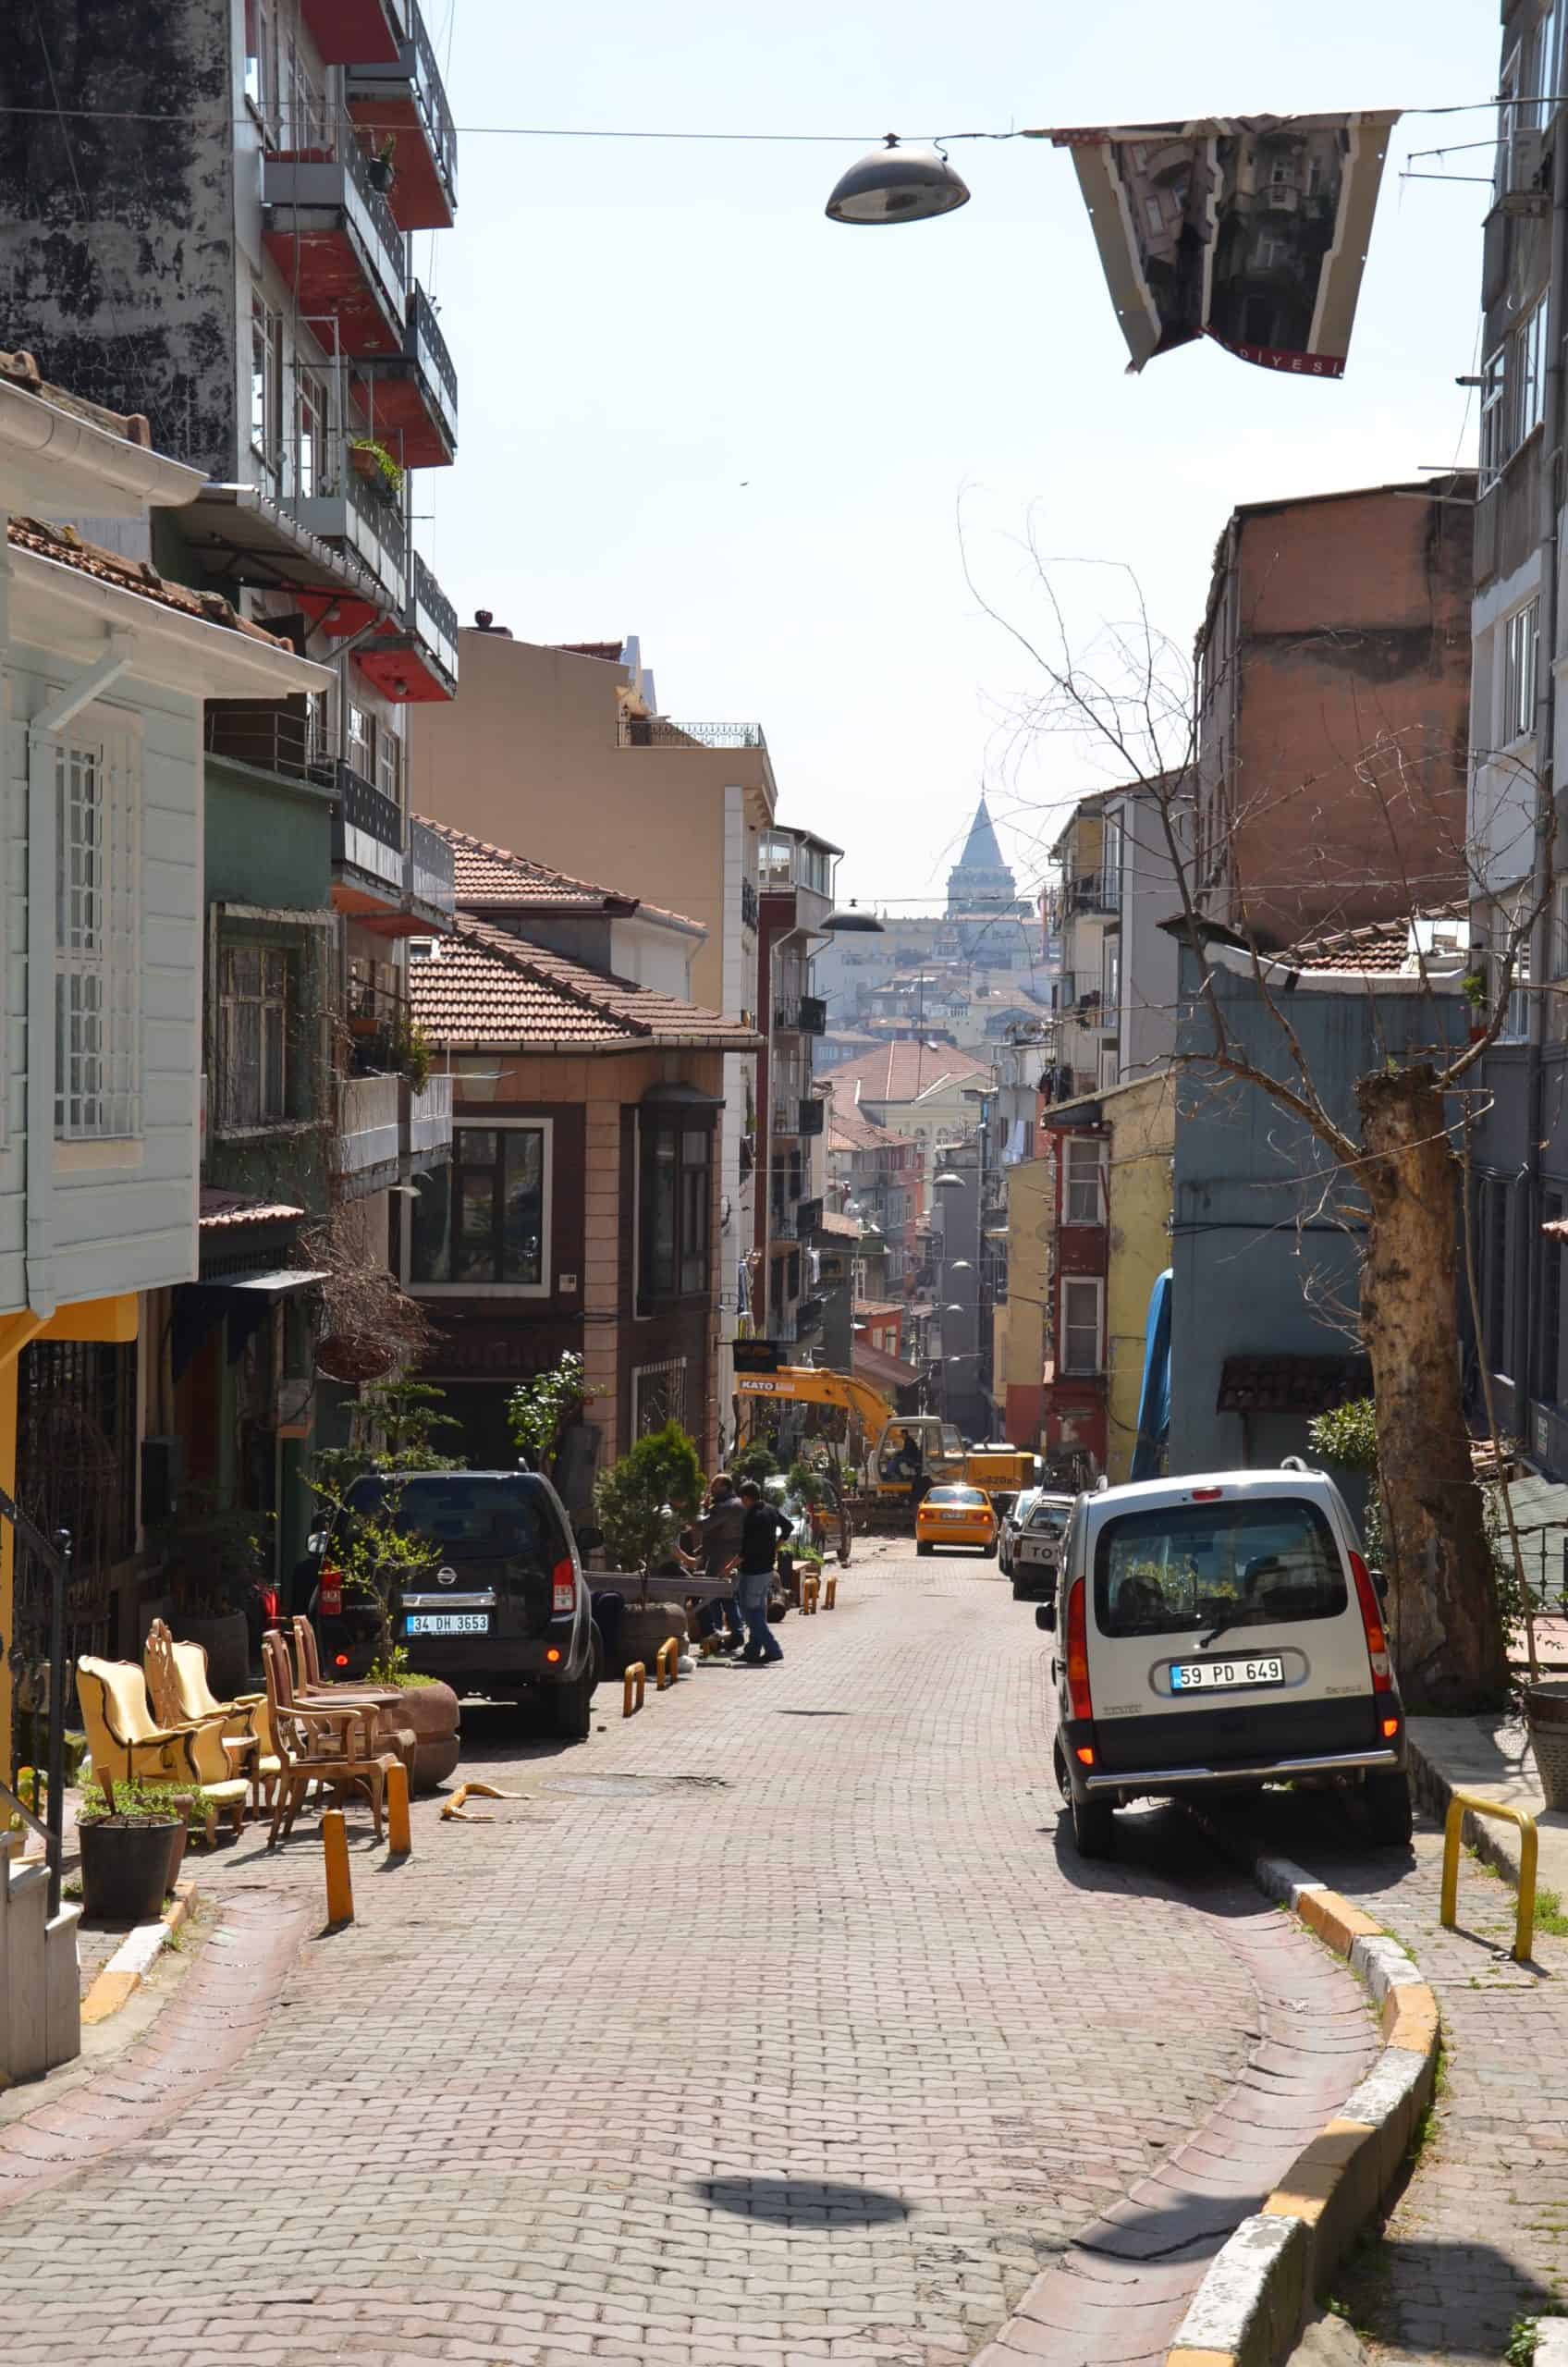 Çukur Cuma Street in Çukurcuma, Istanbul, Turkey